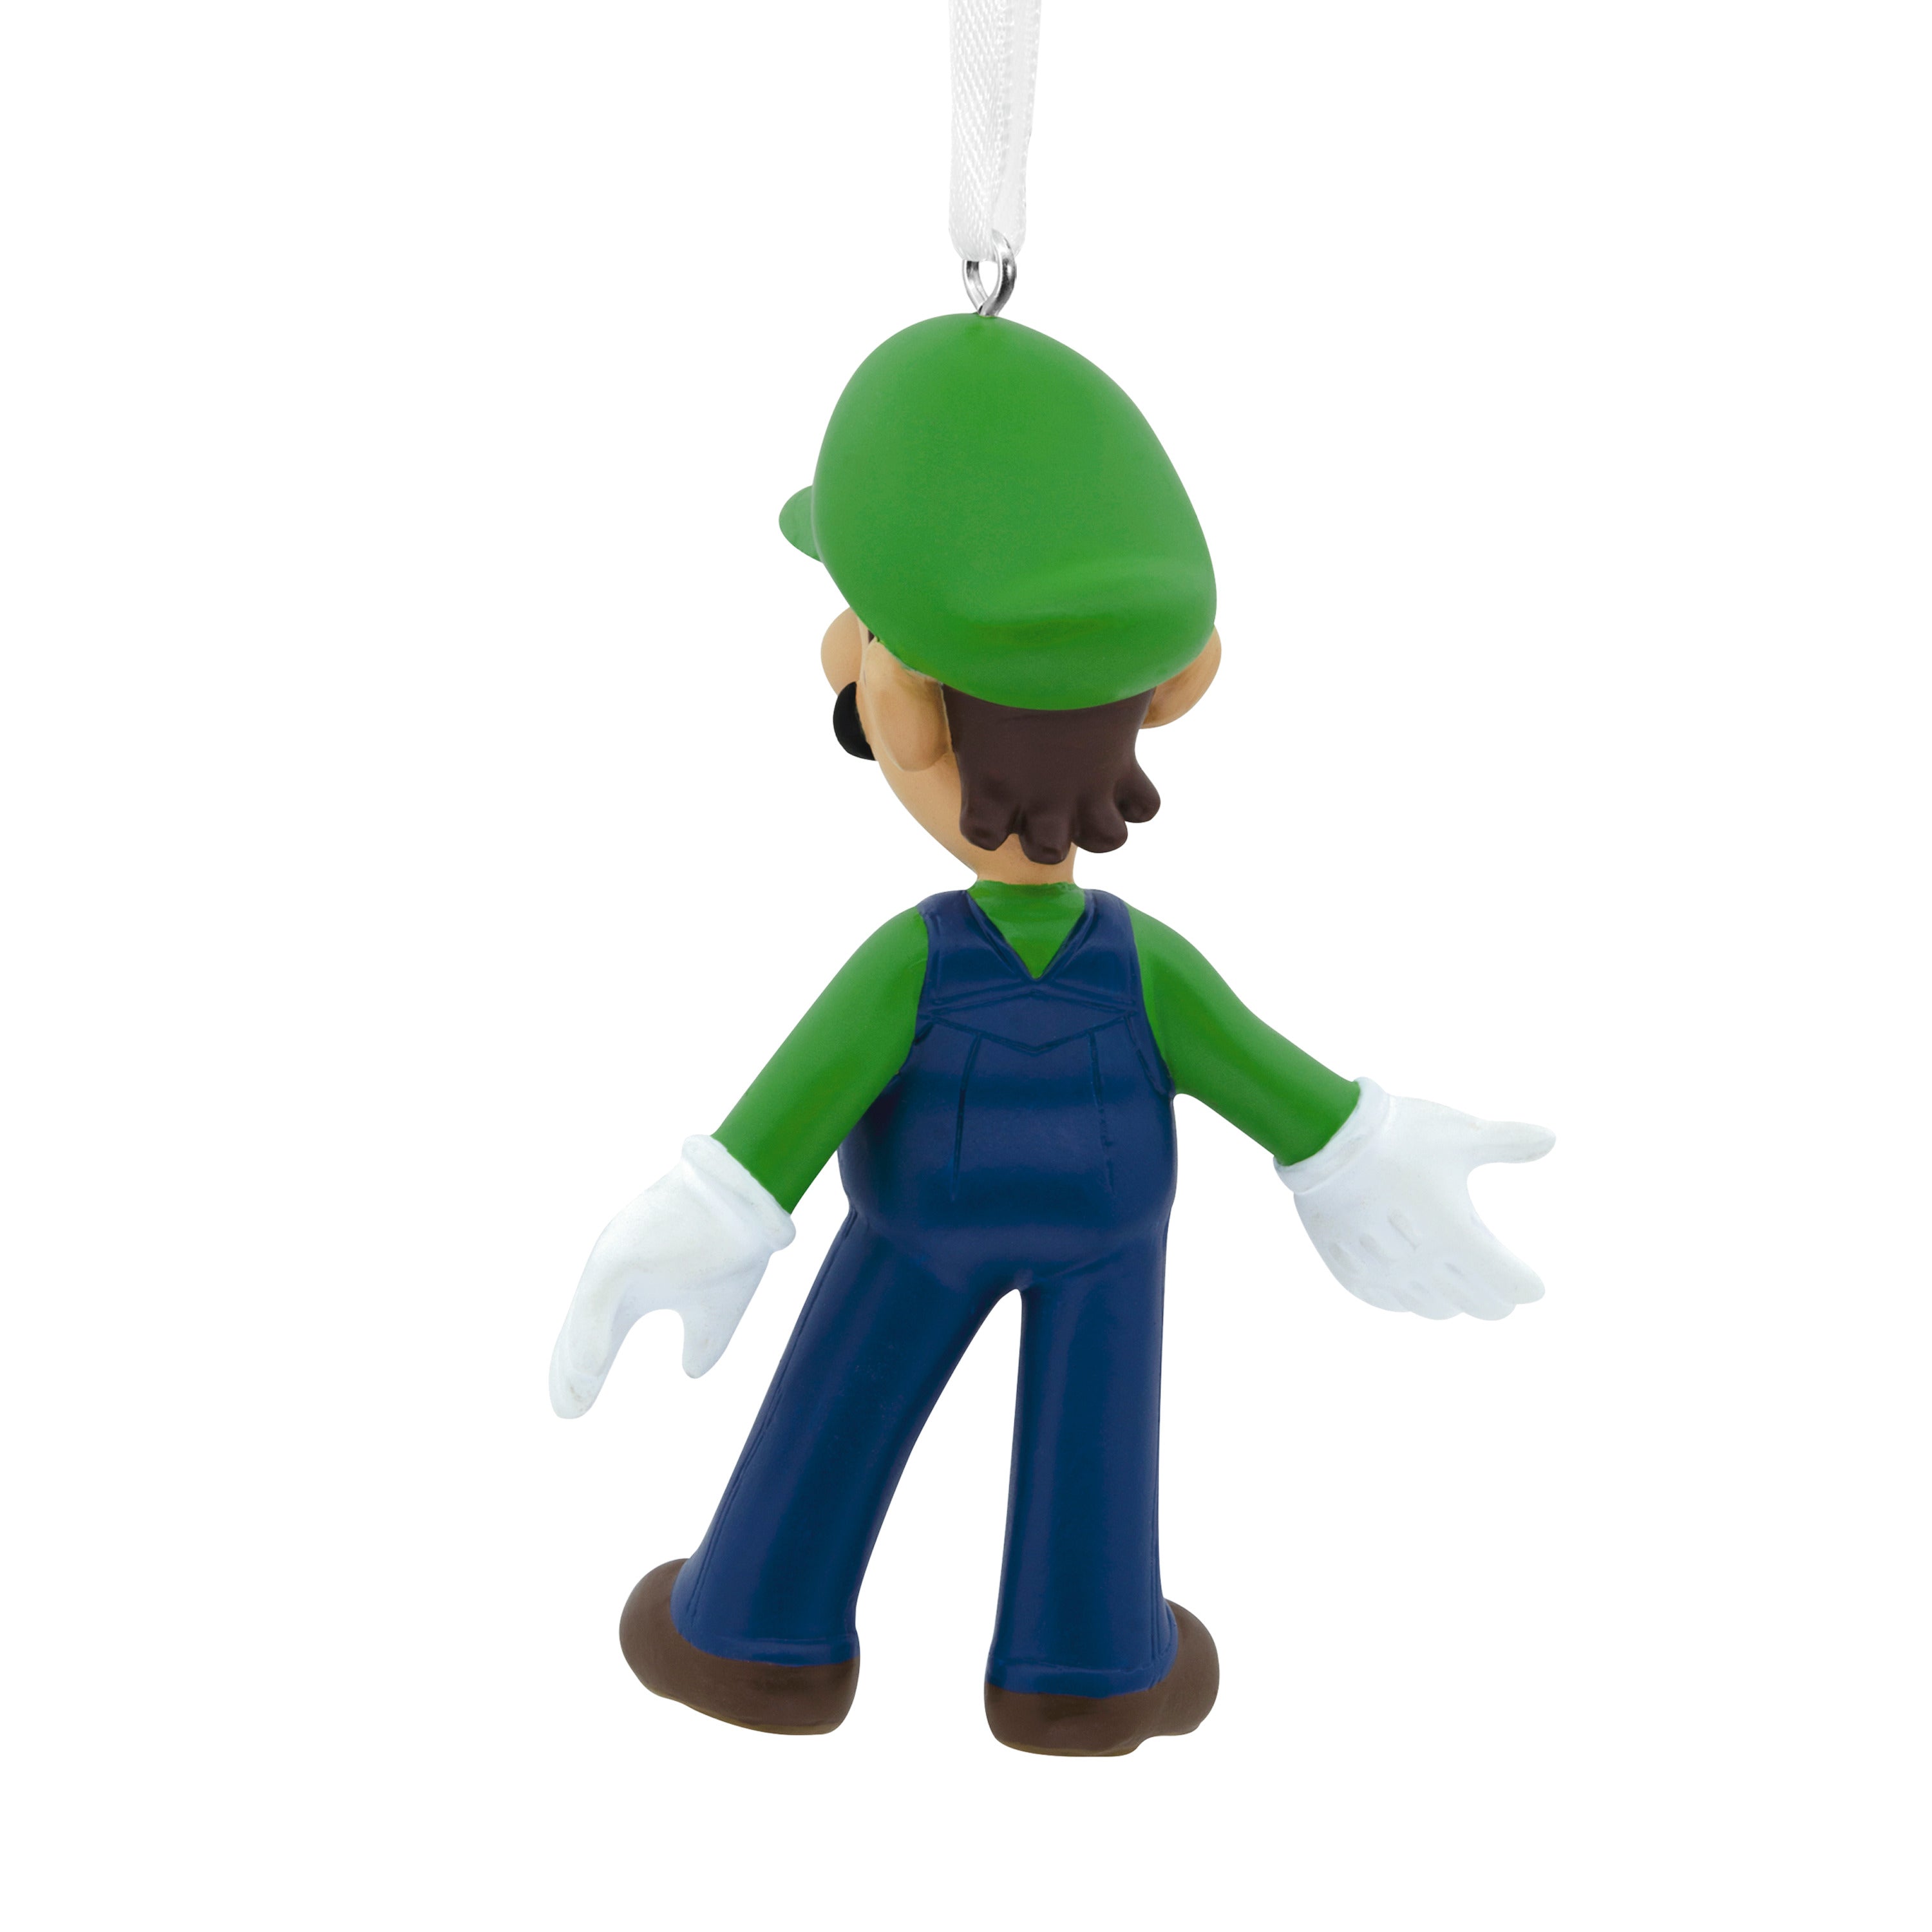 Collectable Nintendo Christmas Ornament - Super Mario Bros Luigi Desig ...